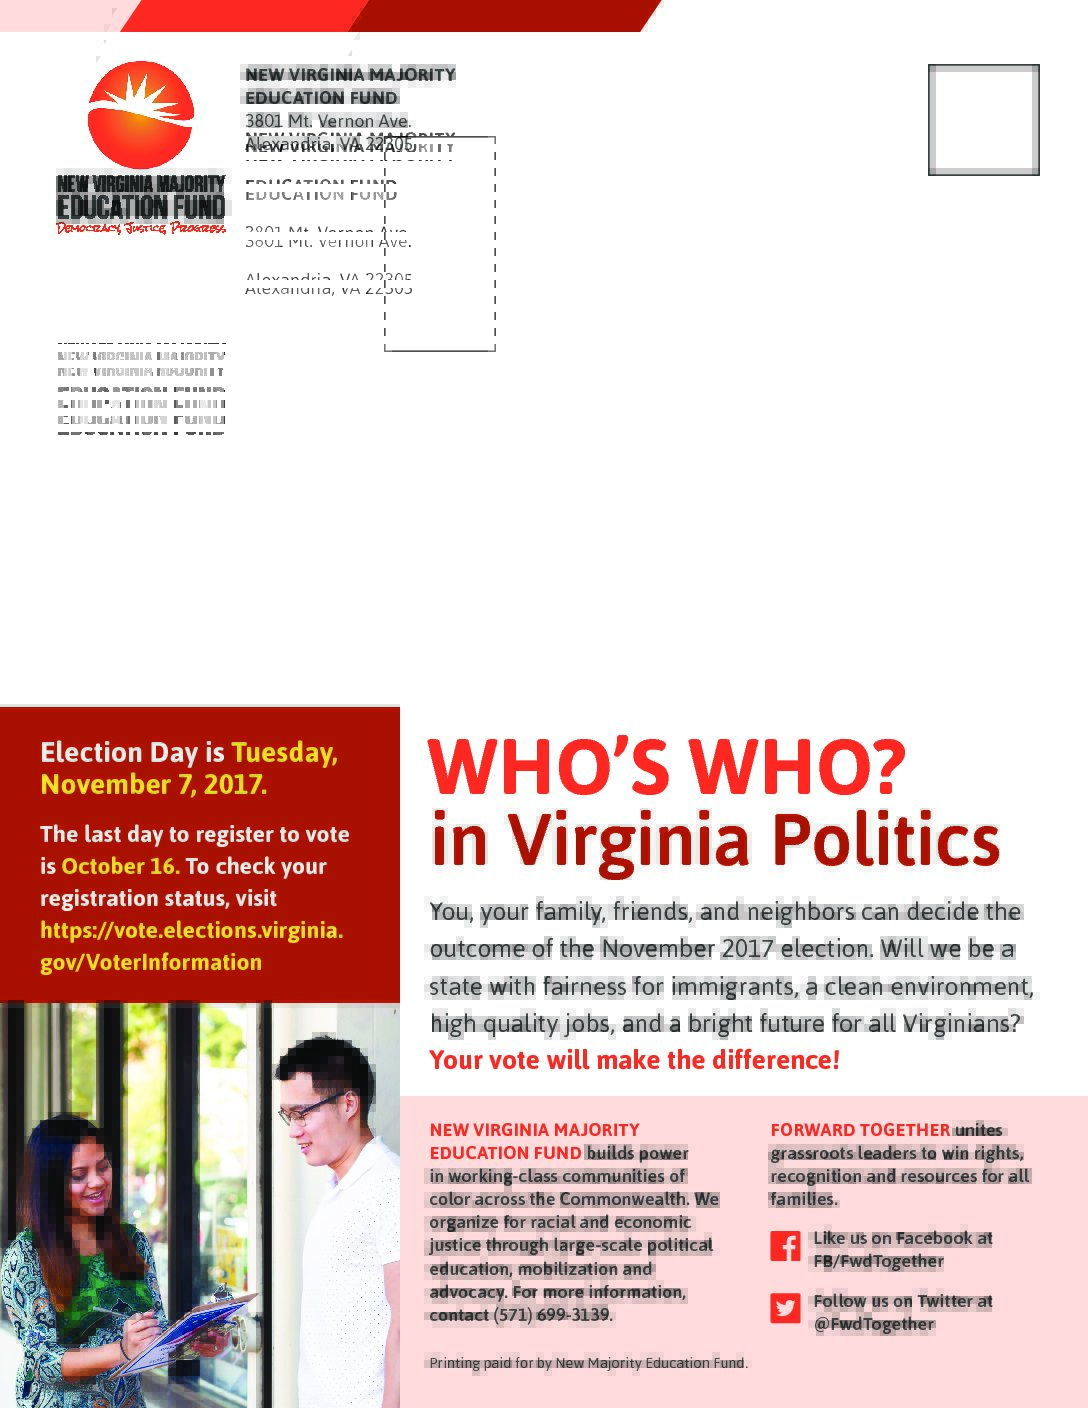 Who’s Who in Virginia Politics